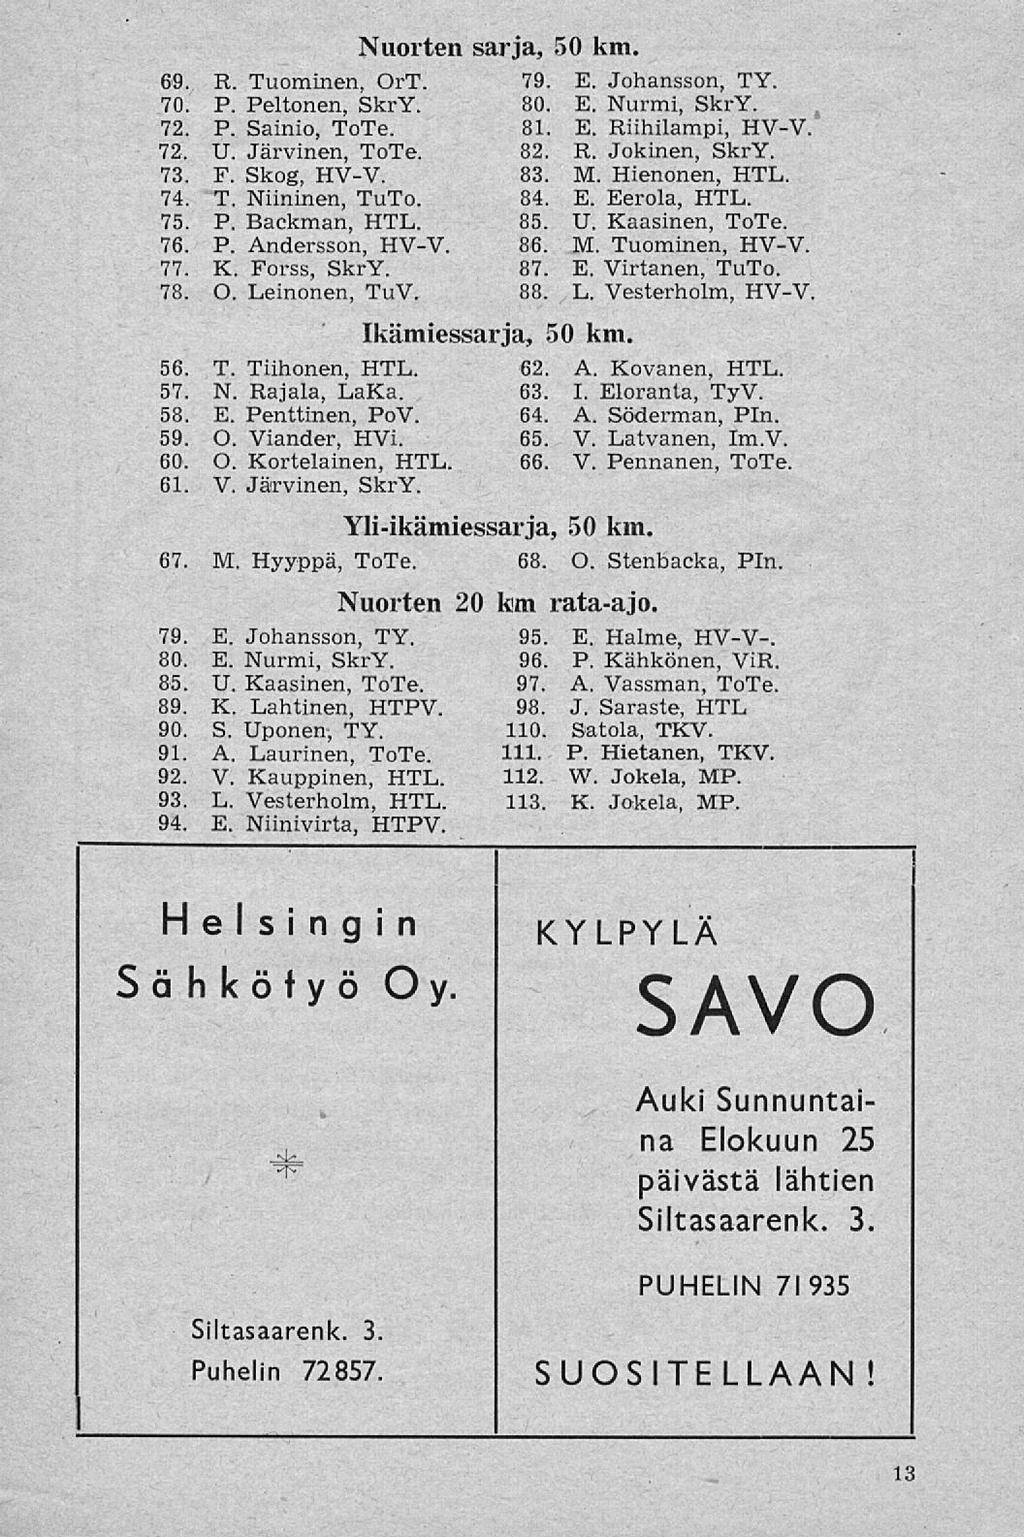 69. R. Tuominen, OrT. 70. P. Peltonen, SkrY. 72. P. Sainio, ToTe. 72. U. Järvinen, ToTe. 73. F. Skog, HV-V. 74. T. Niininen, TuTo. 75. P. Backman, HTL. 76. P. Andersson, HV-V. 77. K. Forss, SkrY. 78.